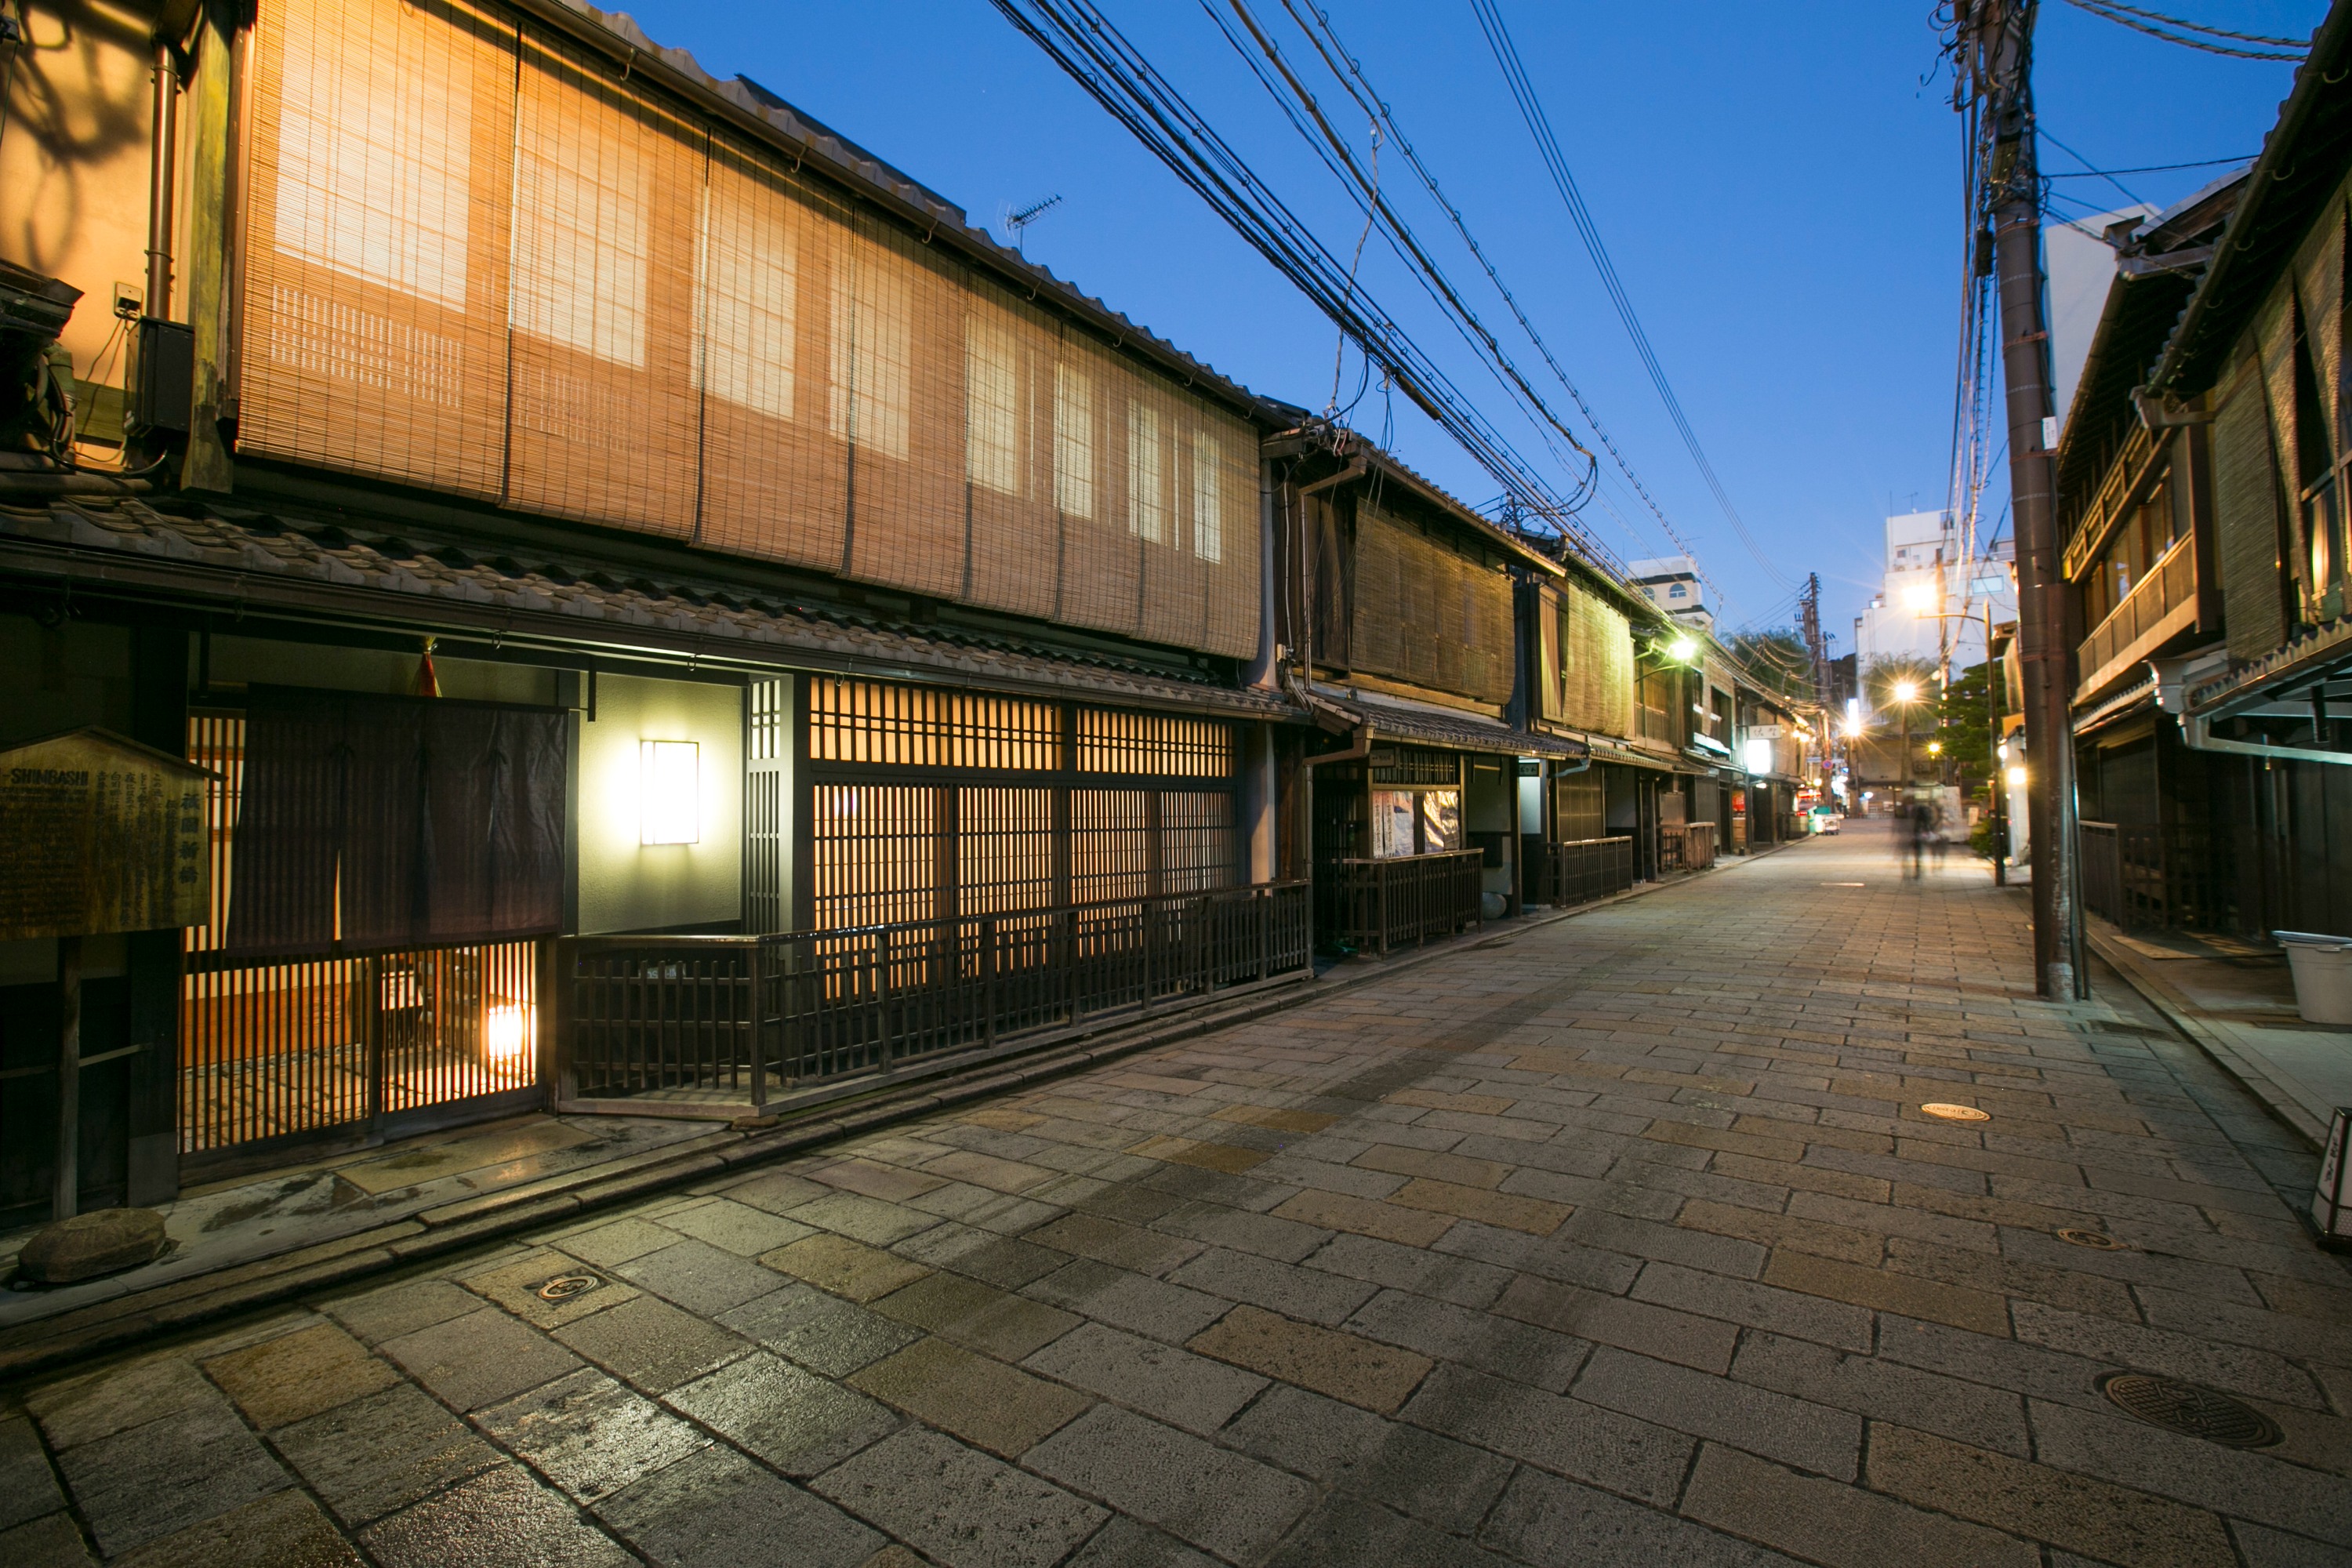 Kyoto Night Tour in Kimono with Tea Ceremony & Zen-style Dinner